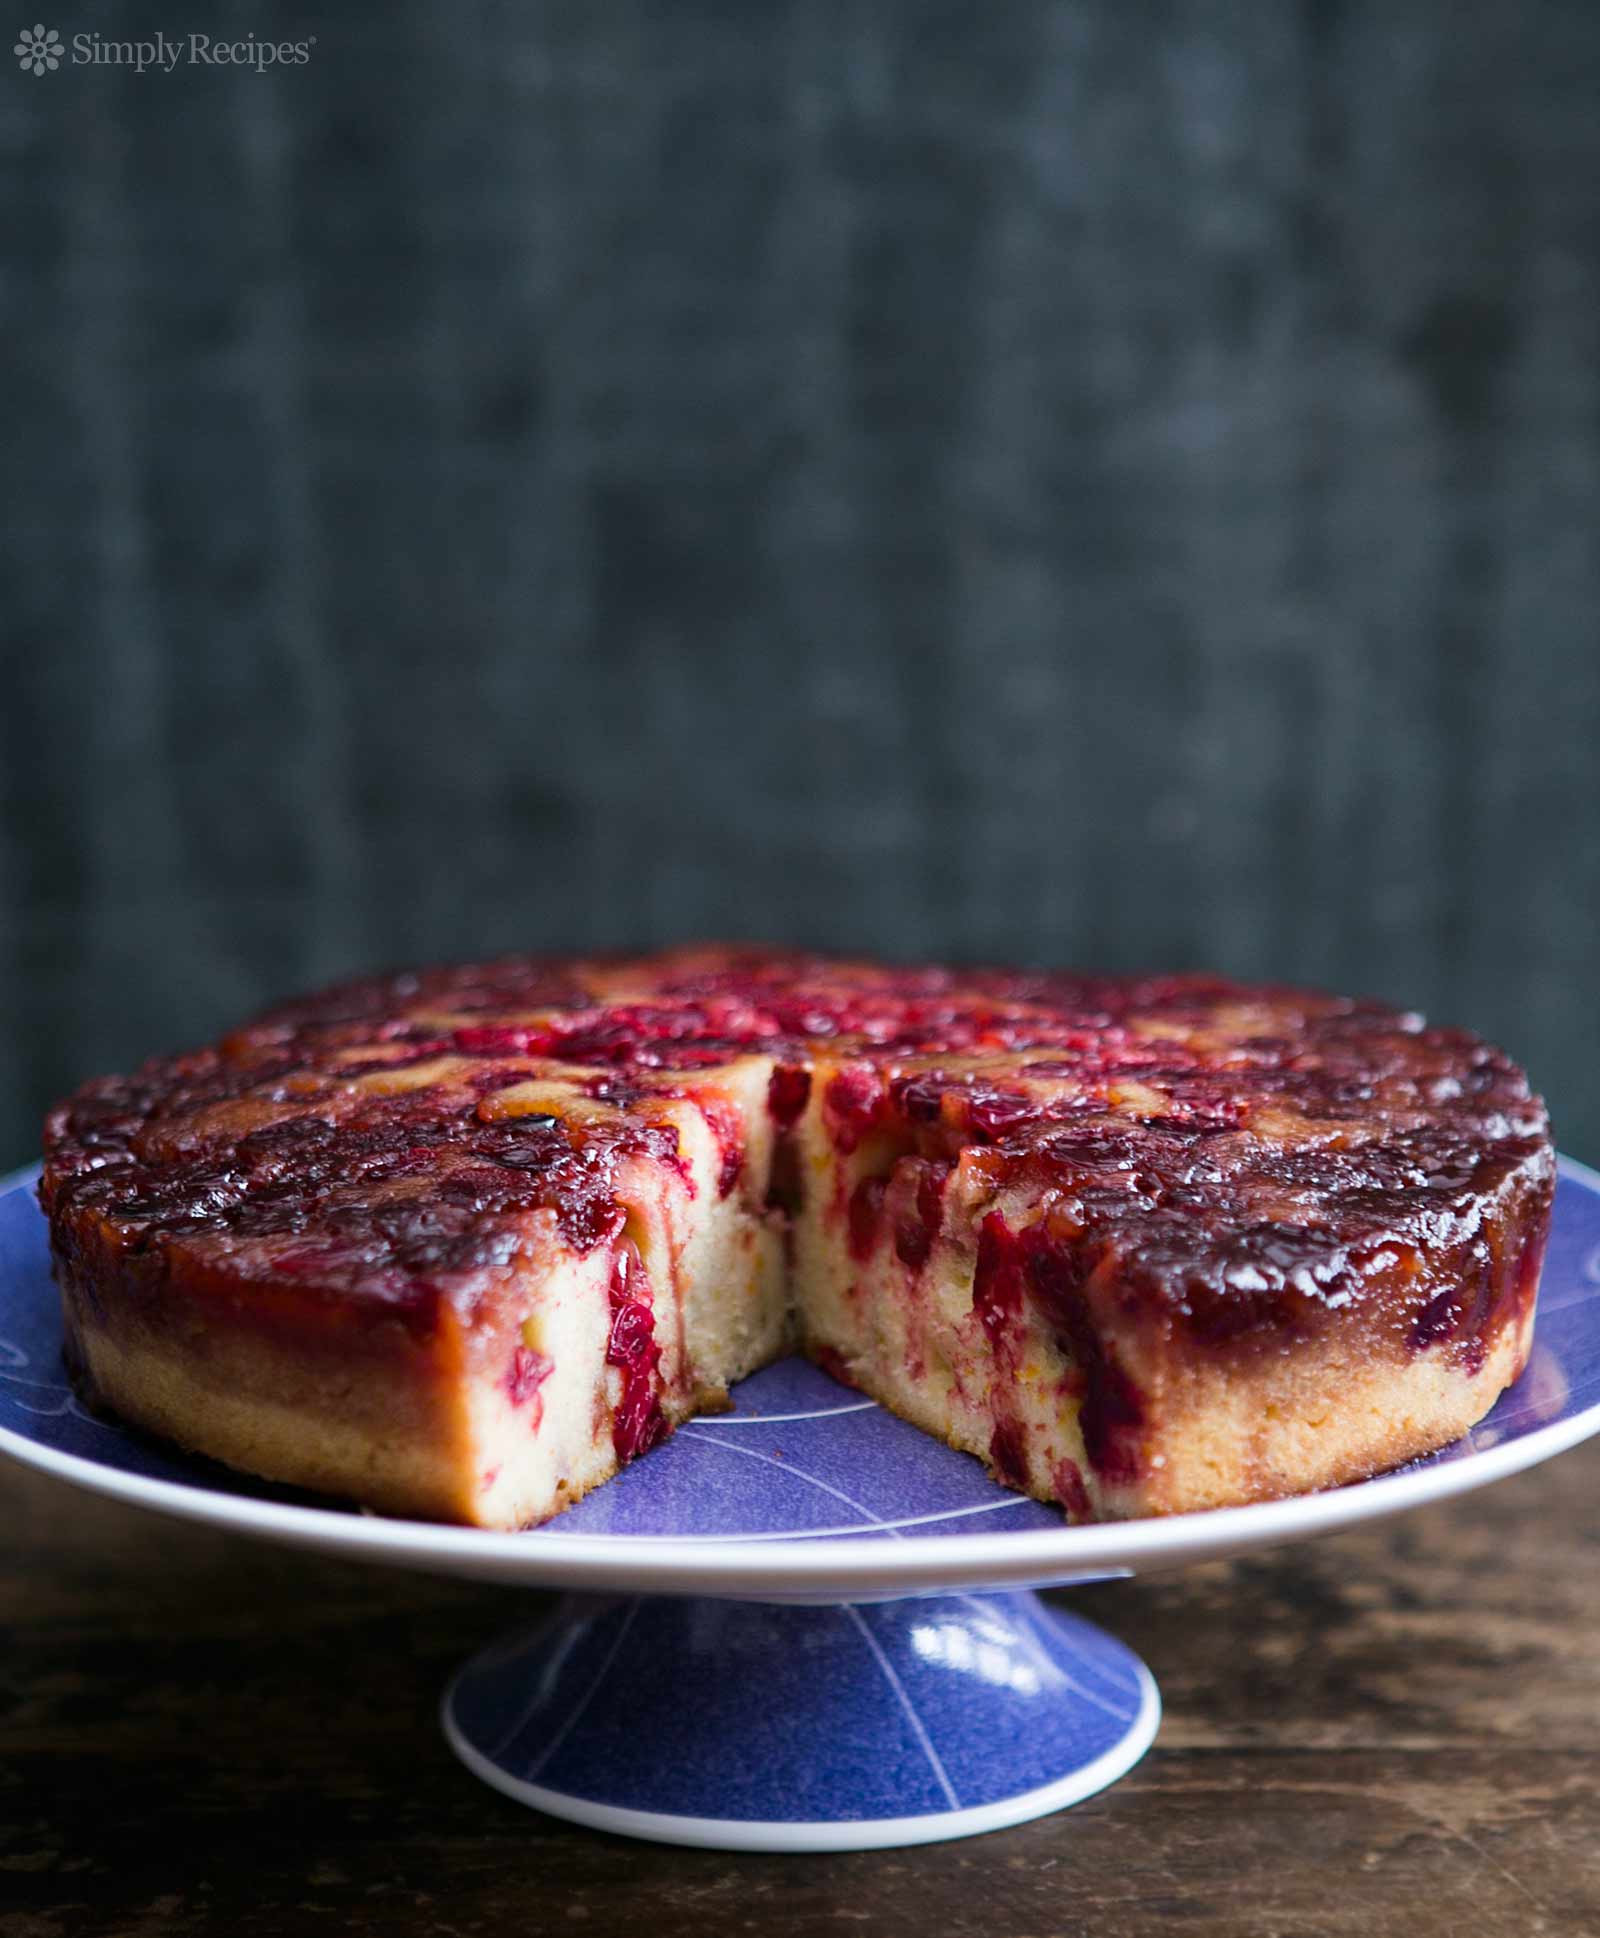 Cranberry Upside Down Cake